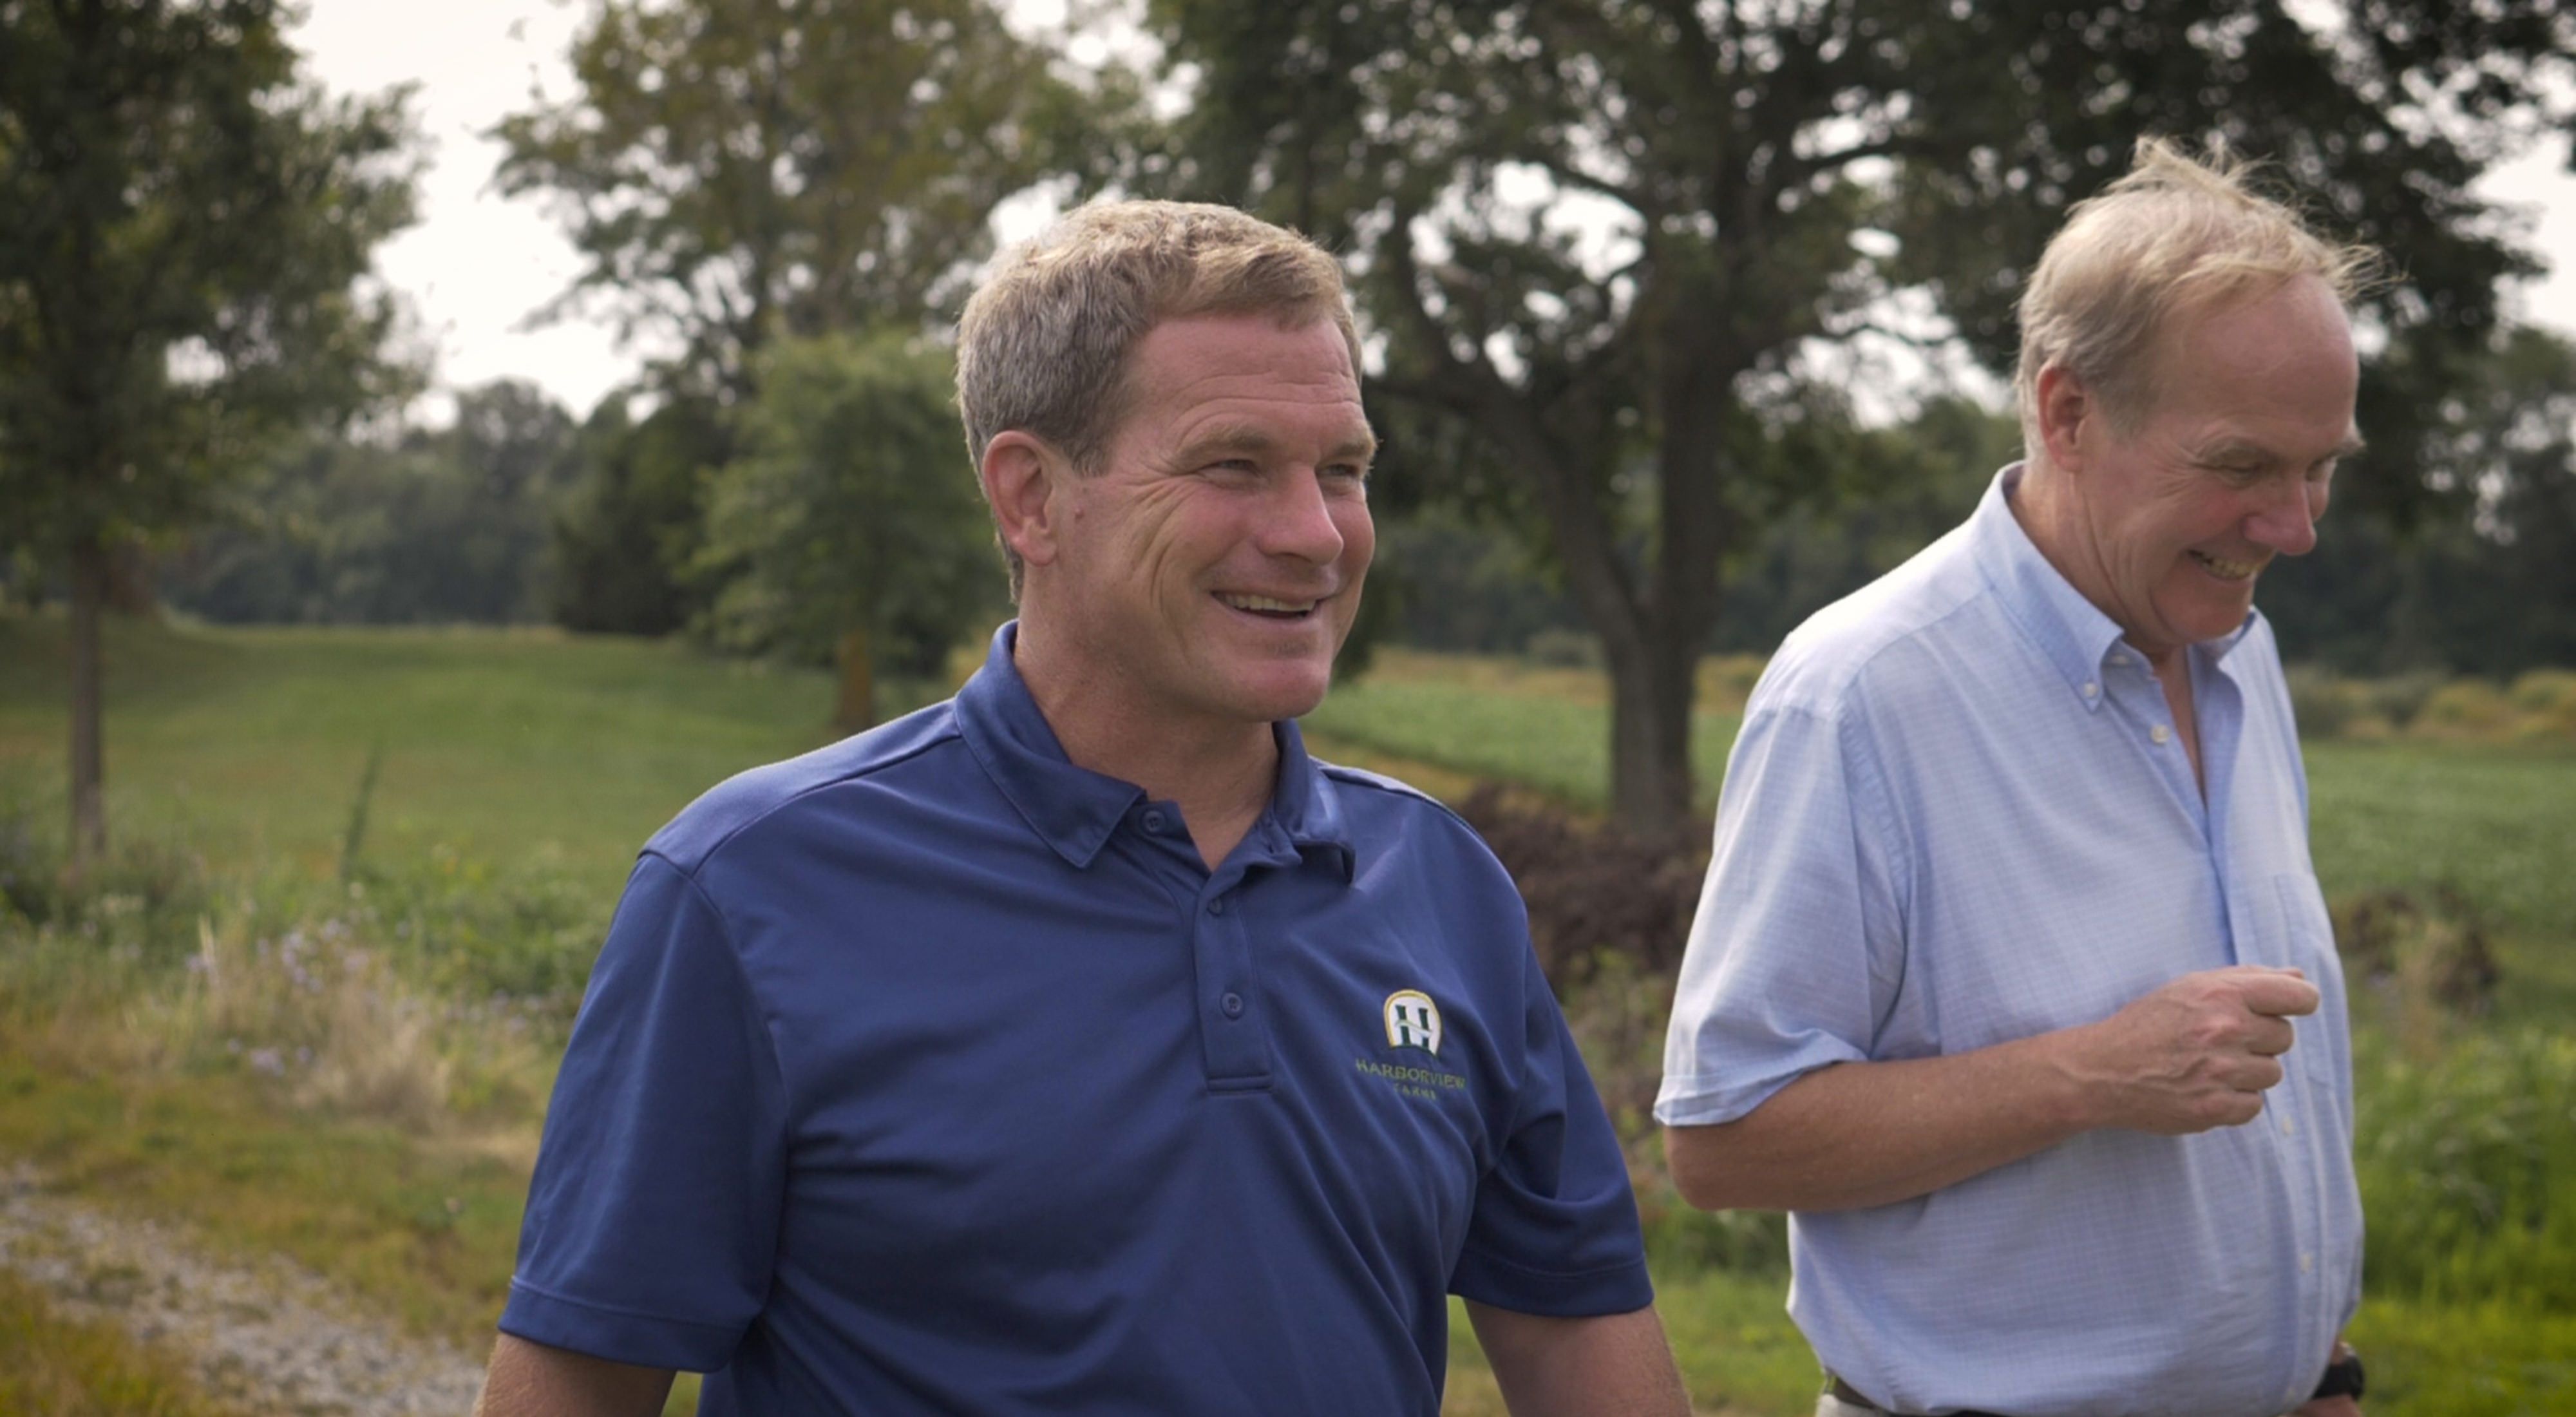 Farmer Trey Hill (left) and landowner Joe Hickman (right) discuss the importance of conservation on Joe’s farmland.